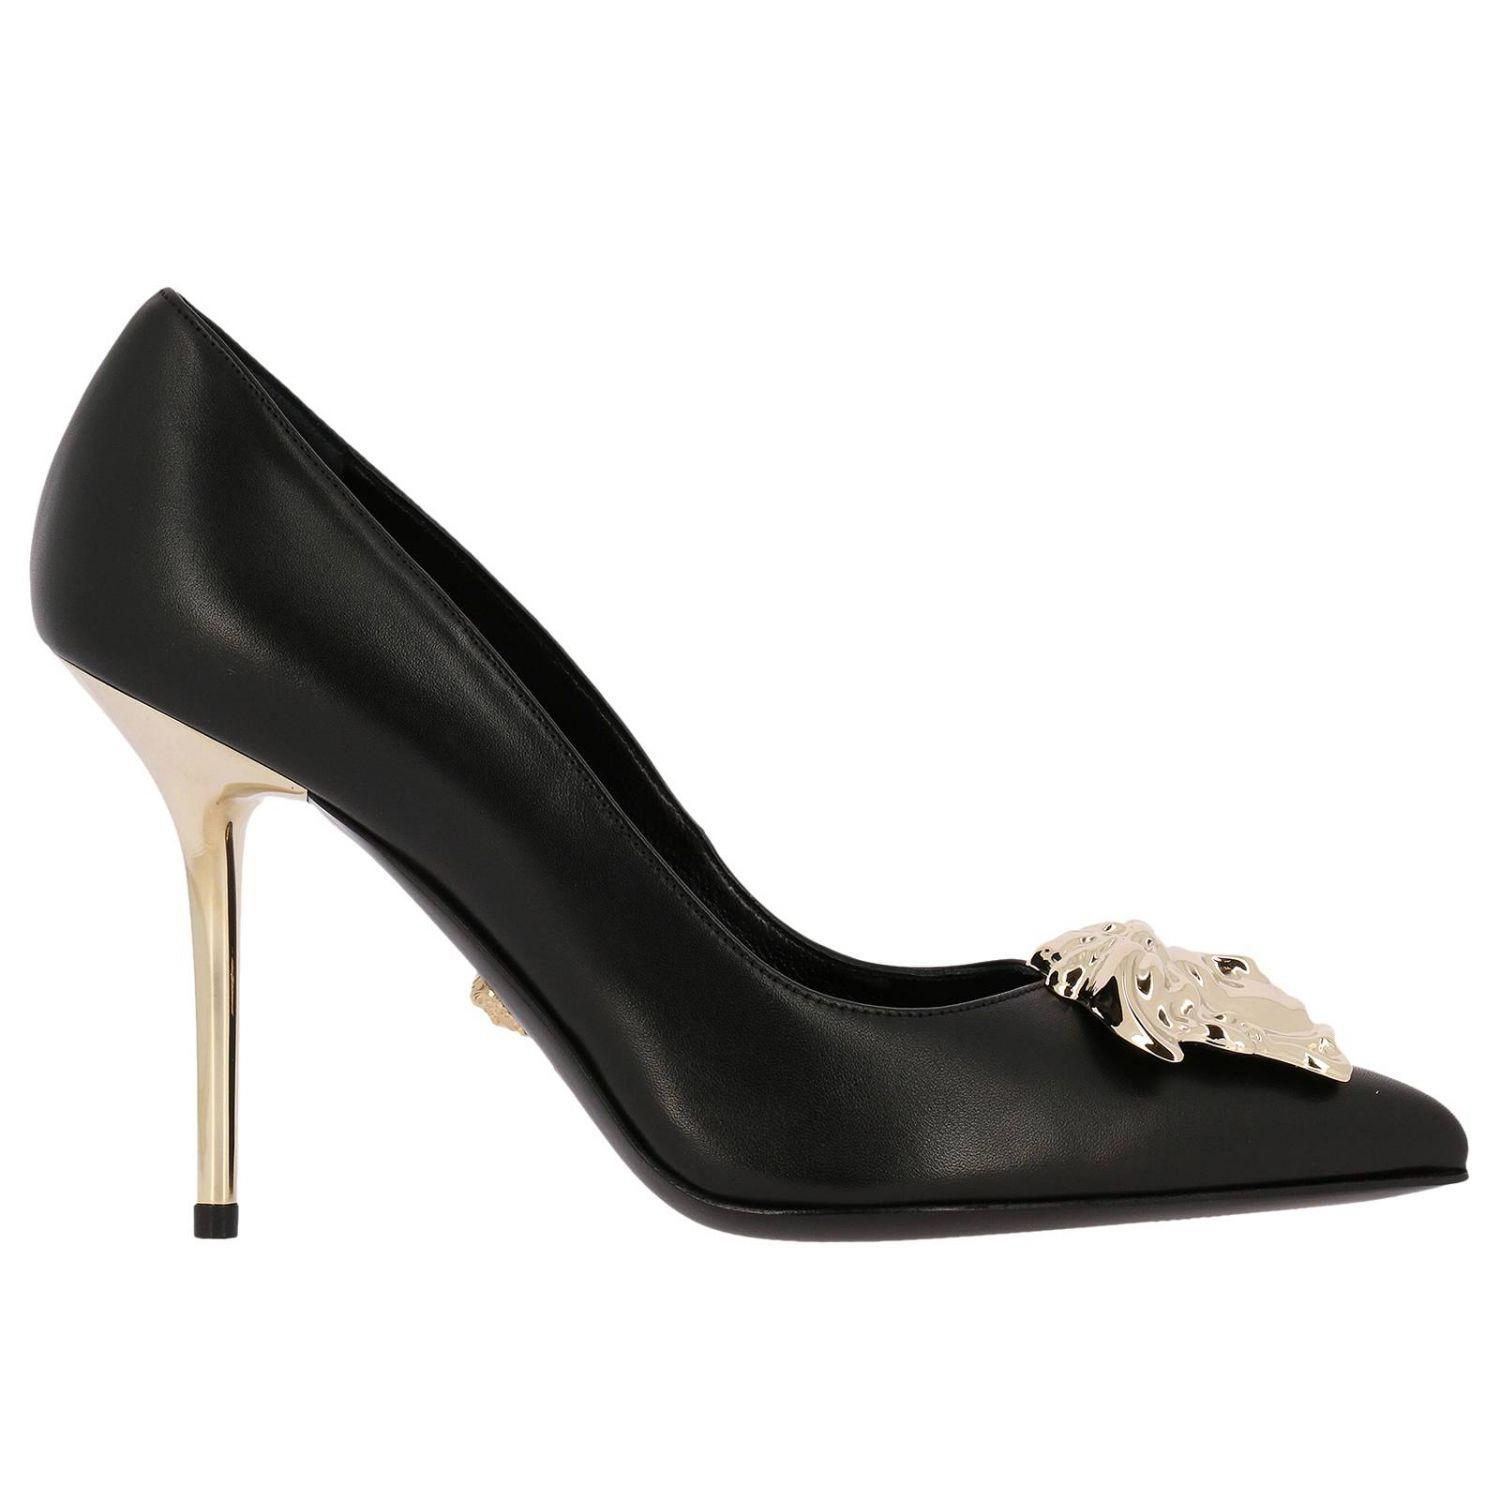 Versace Pumps Shoes Women in Black - Lyst